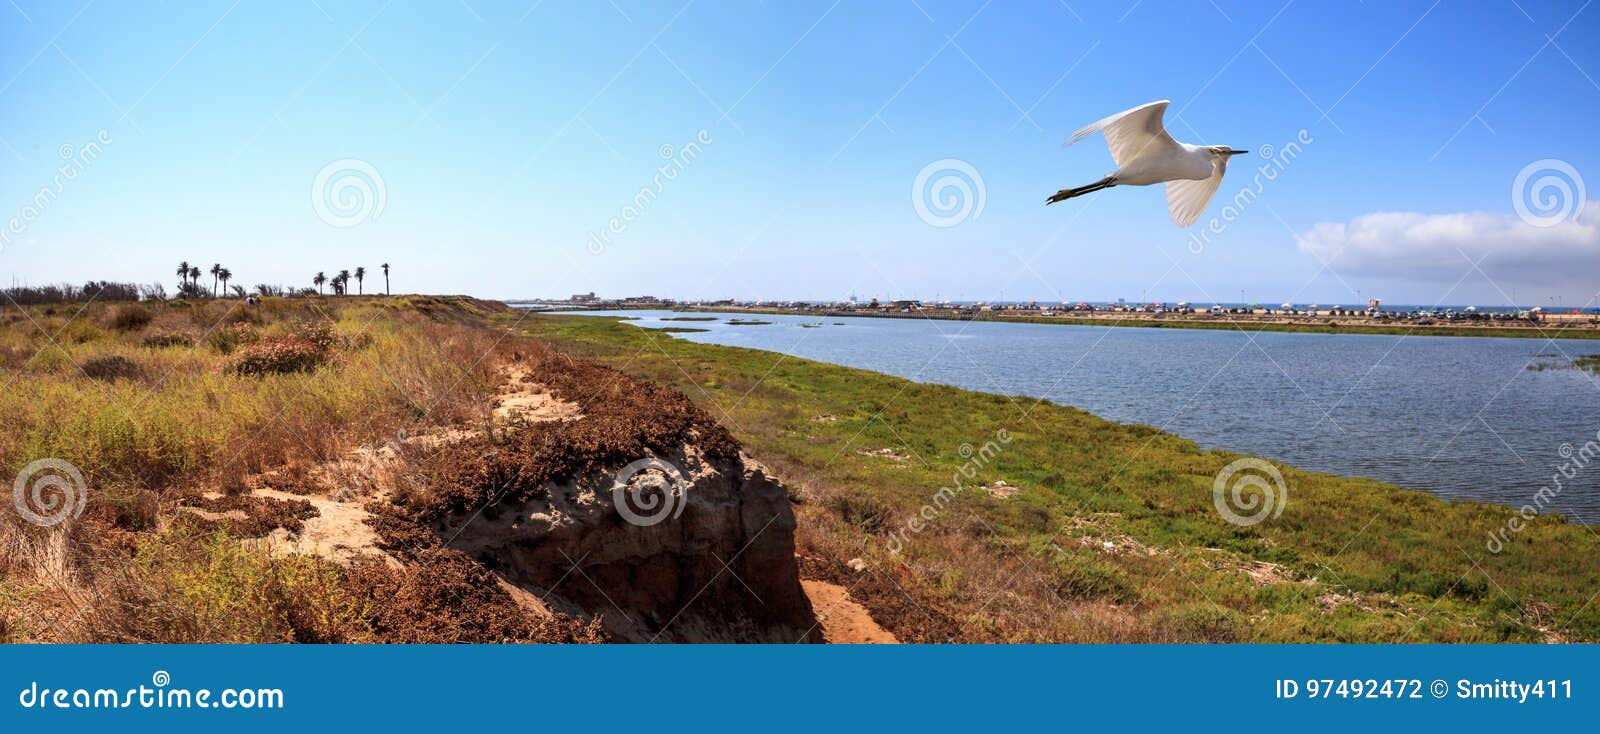 great egret ardea alba flies over a marsh in bolsa chica wetland